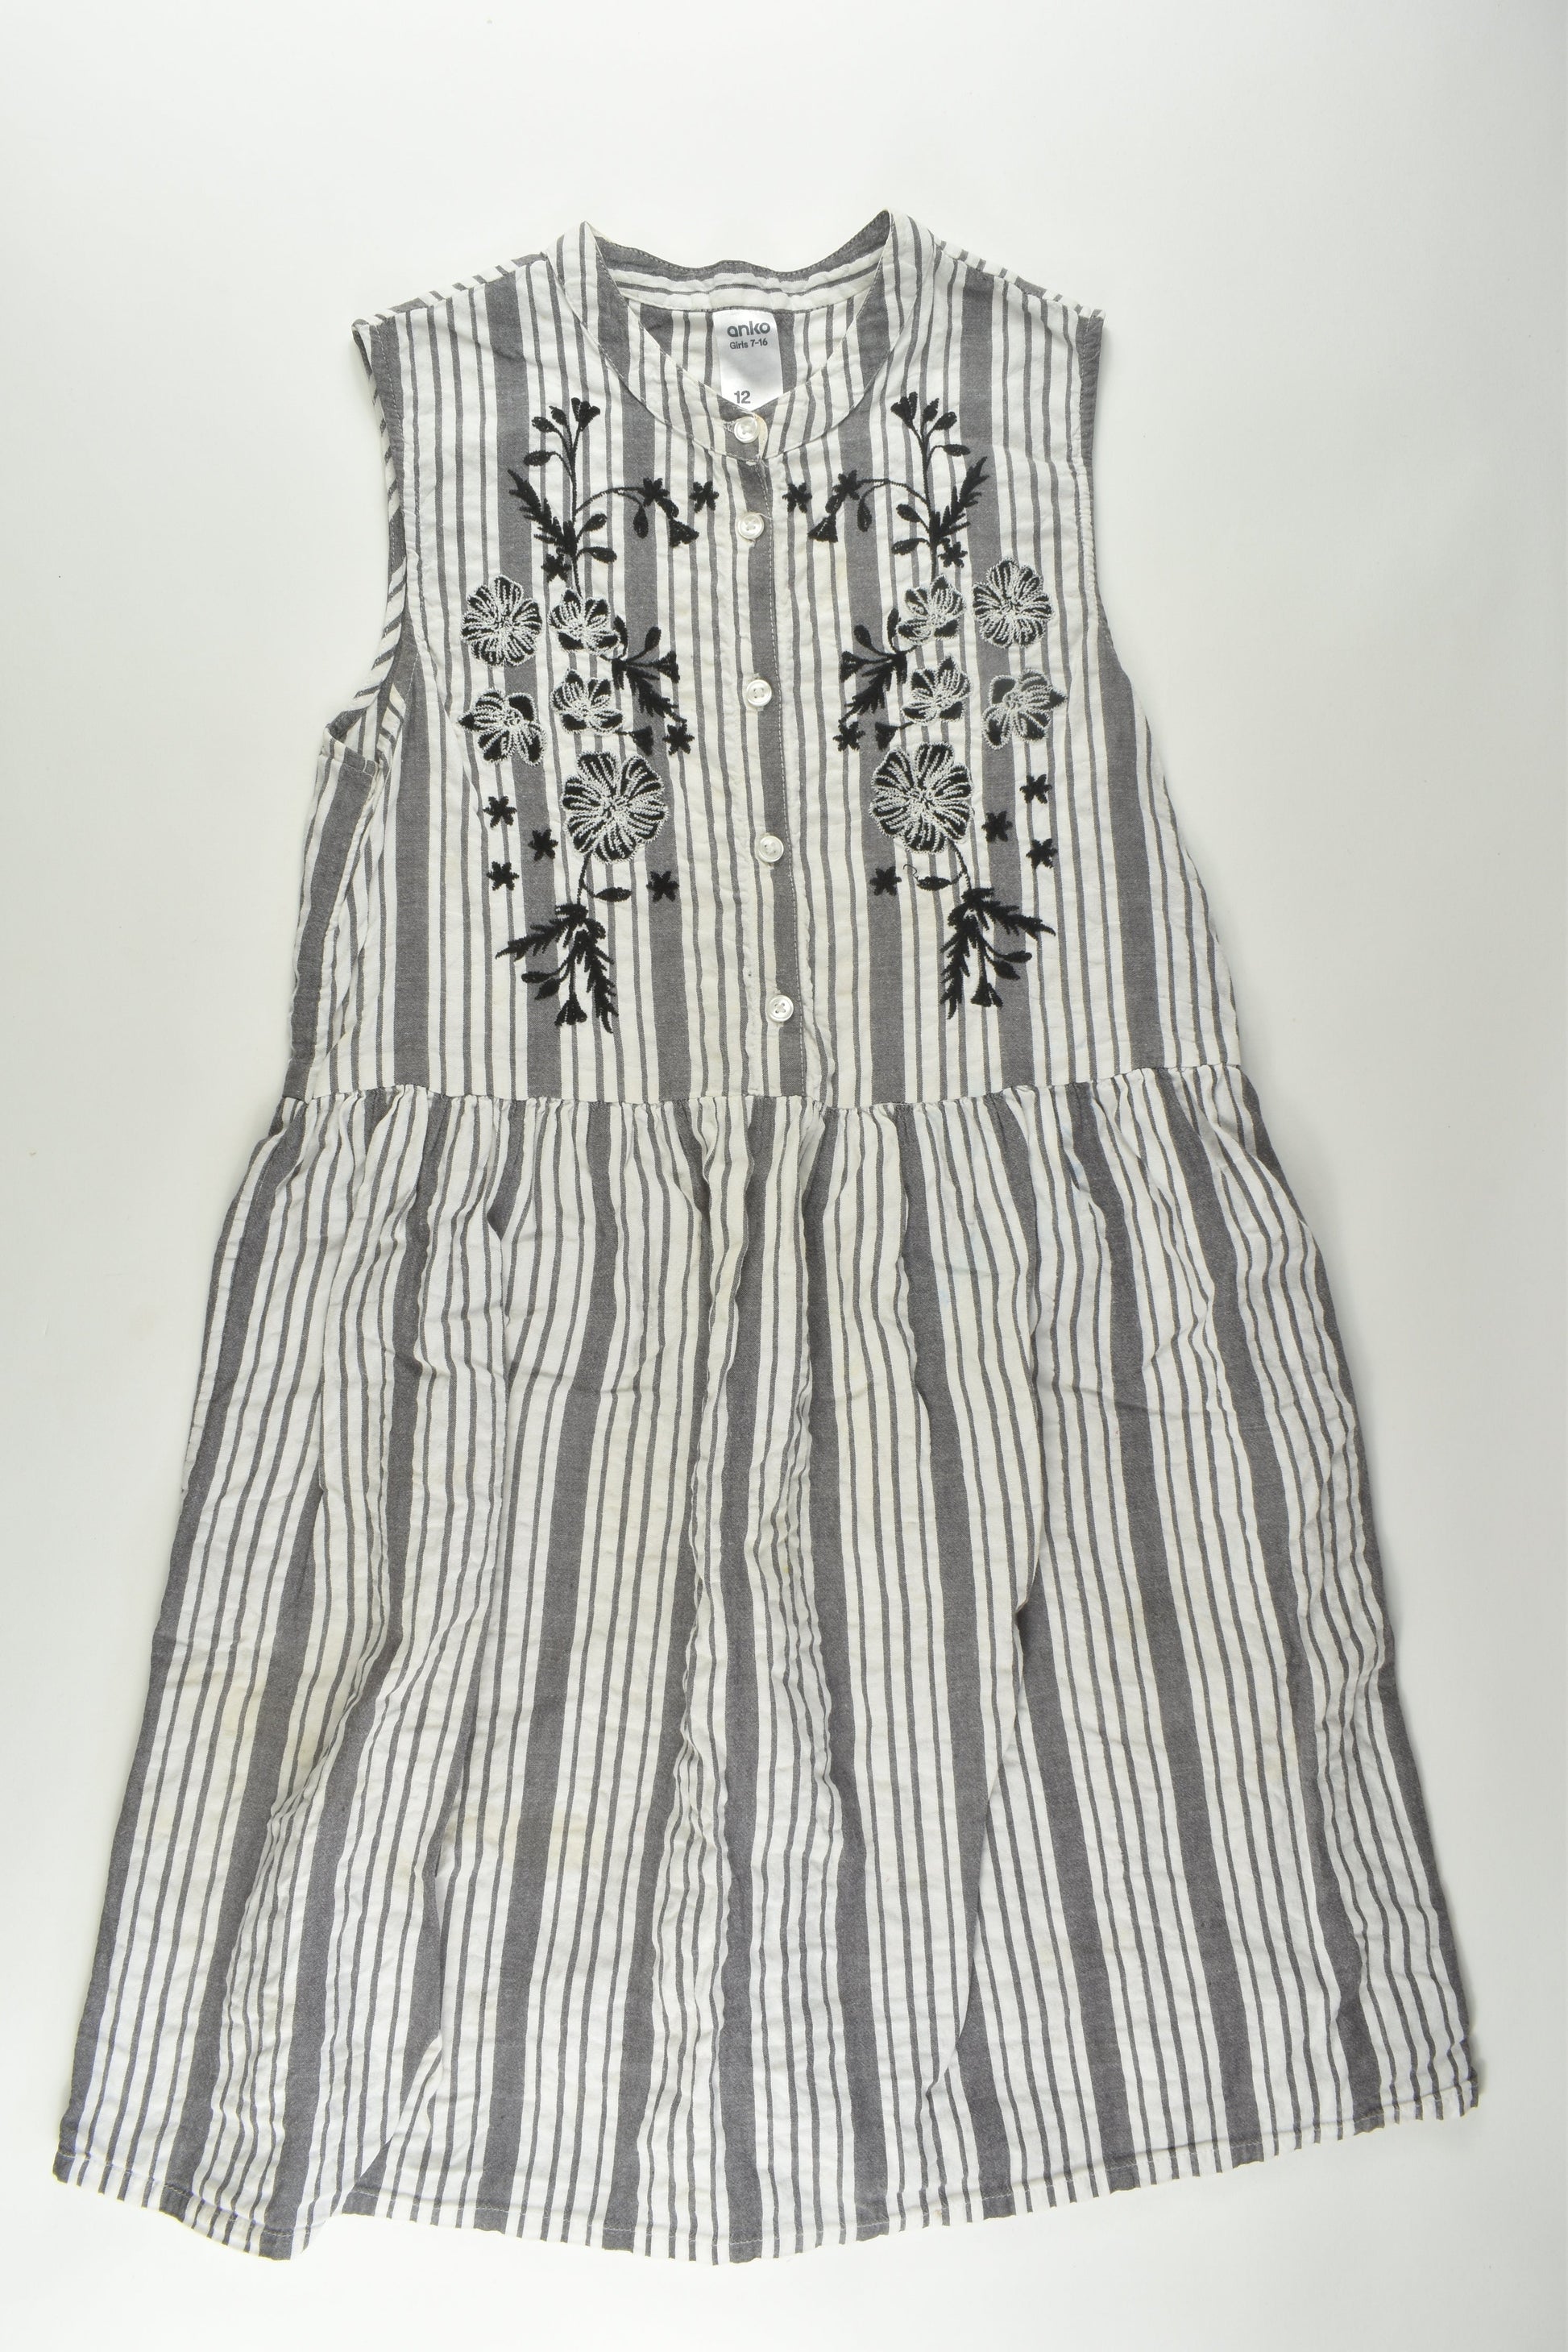 Anko Size 12 Embroidery Dress